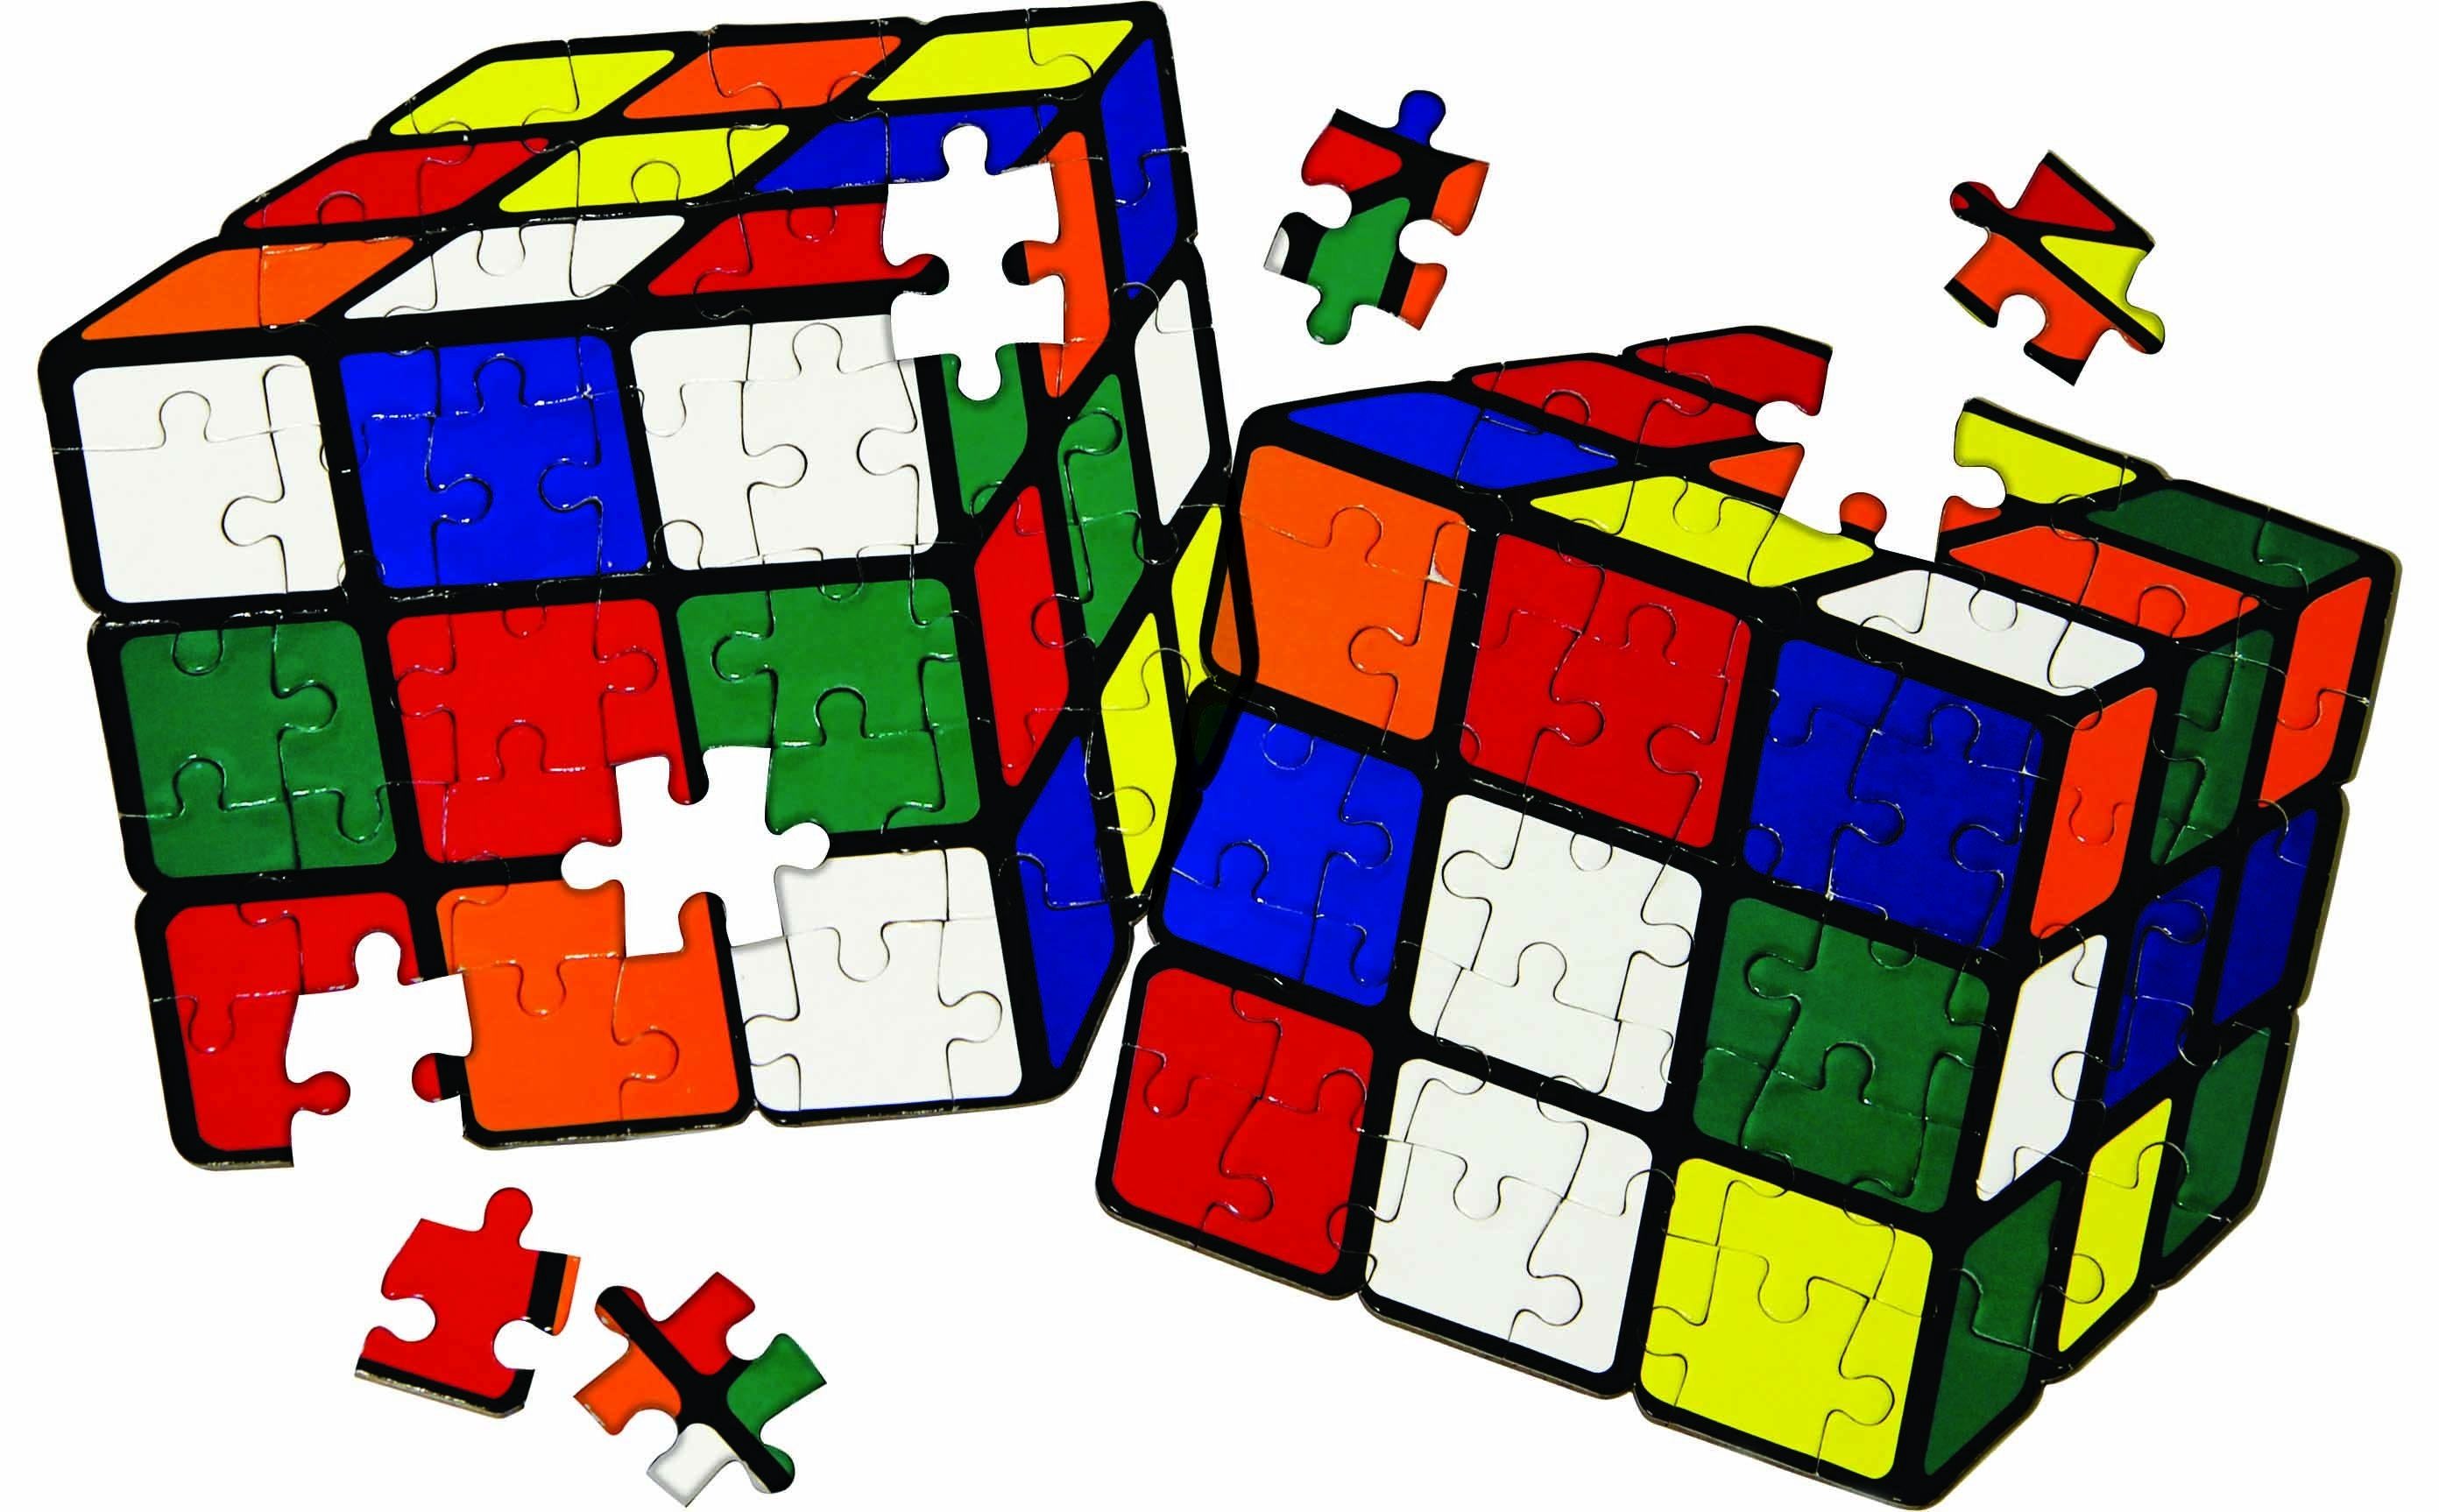 Развлечения головоломки. Рубикс импосибл. Головоломка кубик Рубика. Пазл из кубиков. Кубик Рубика на белом фоне.